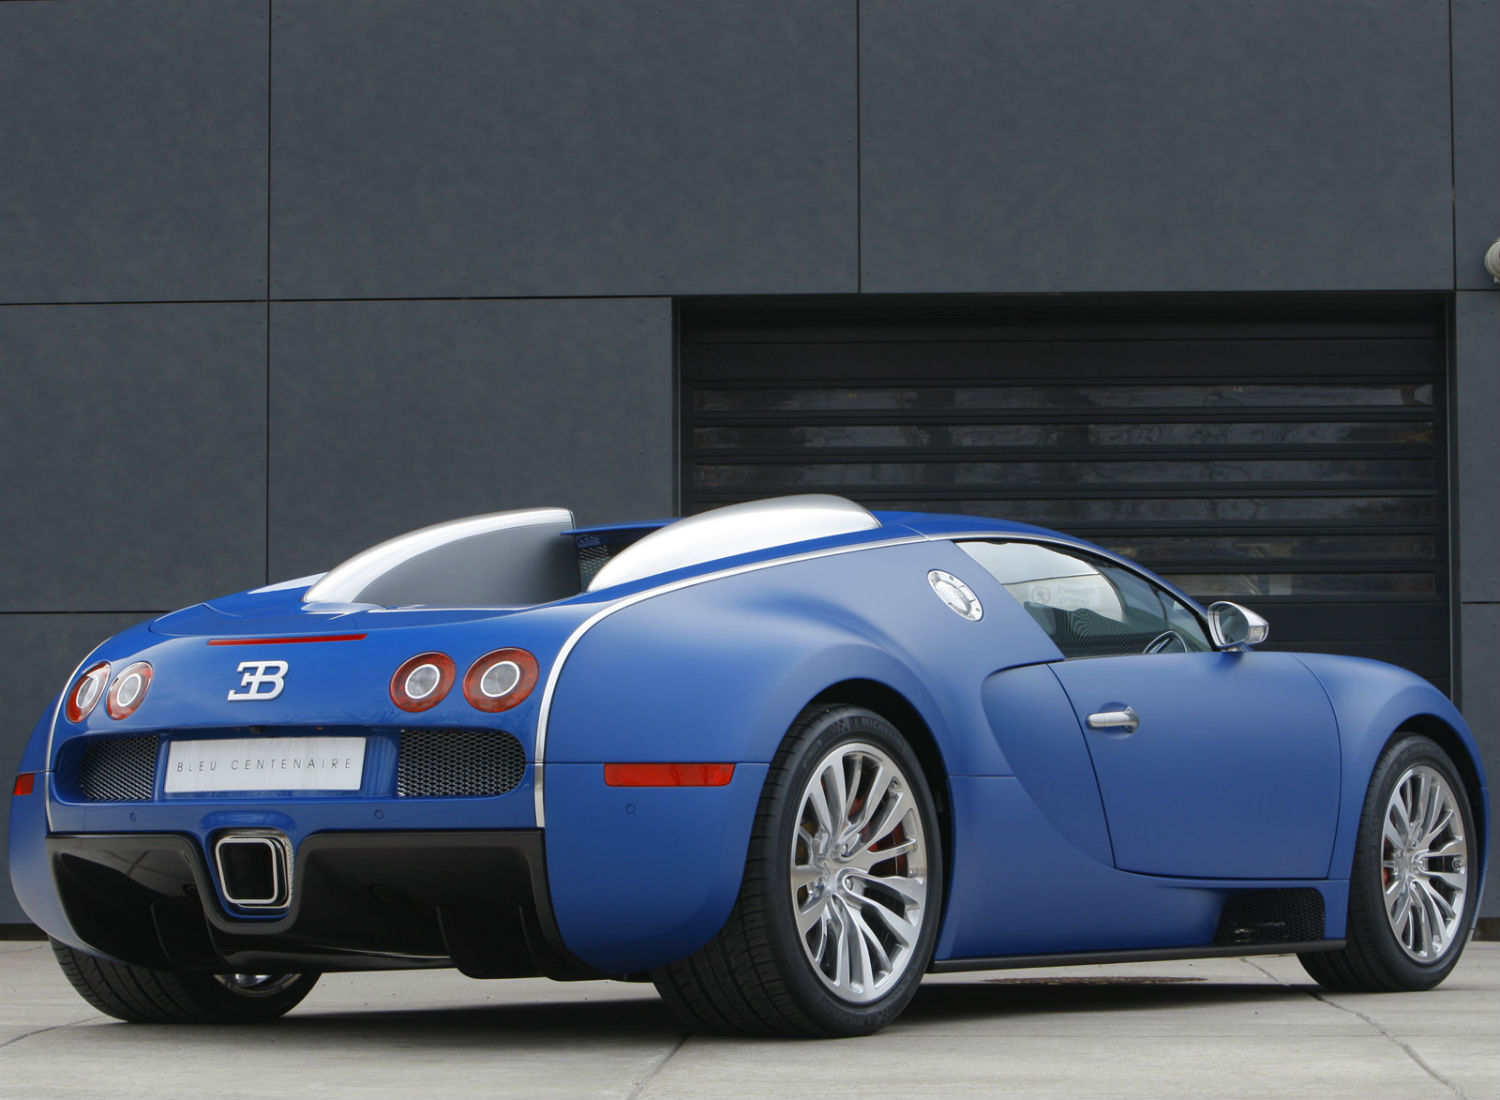 Bugatti Veyron Blue Centenaire